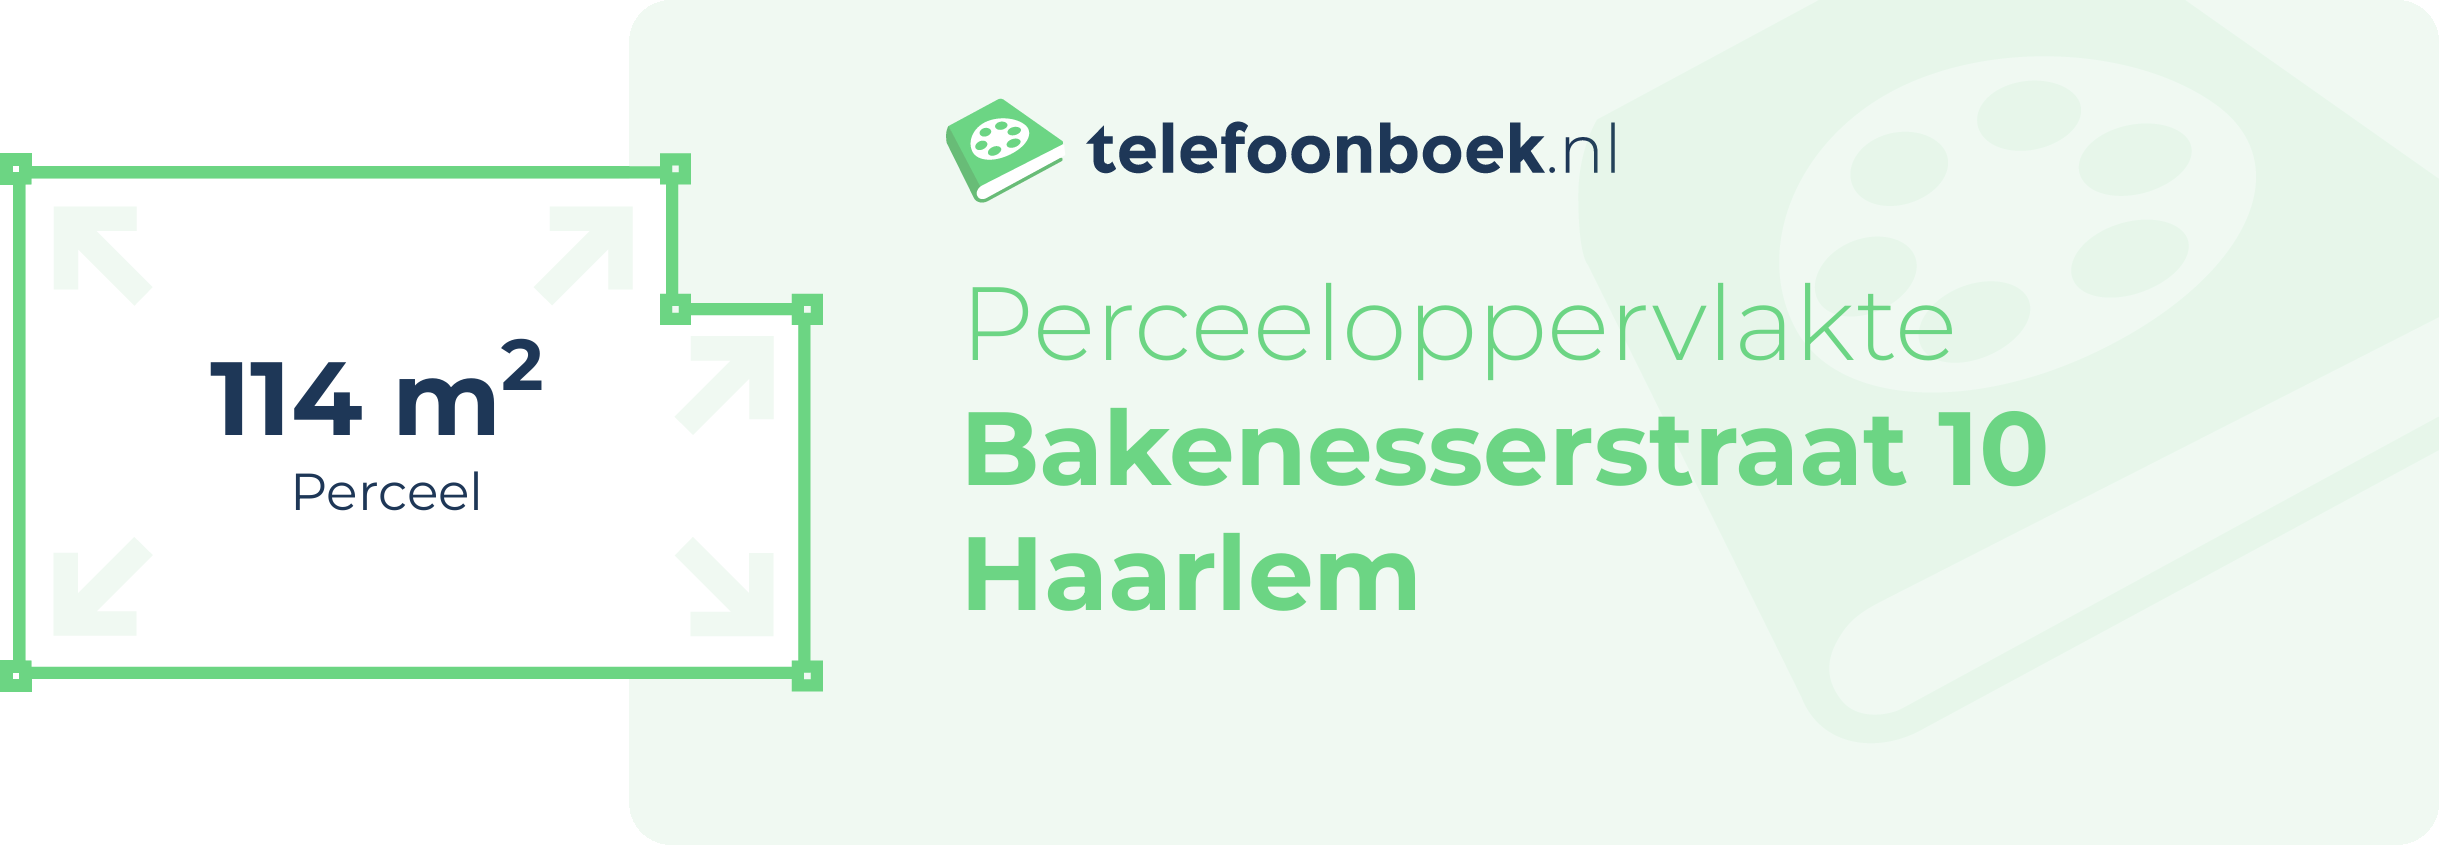 Perceeloppervlakte Bakenesserstraat 10 Haarlem